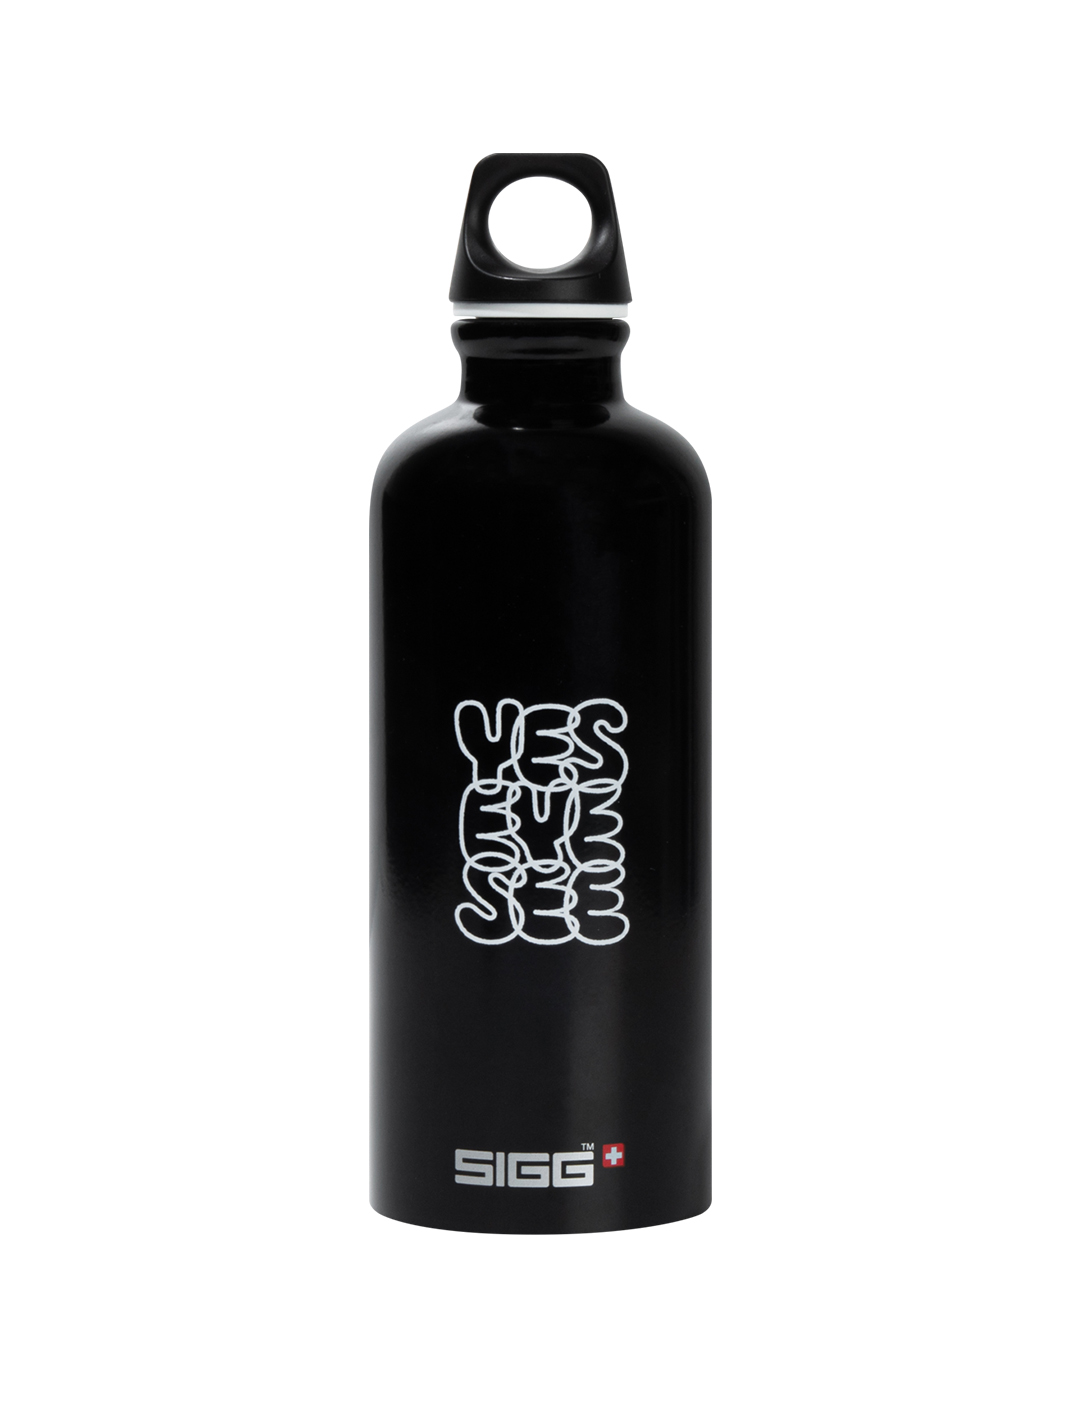 SIGG x Y.E.S Bottle Black